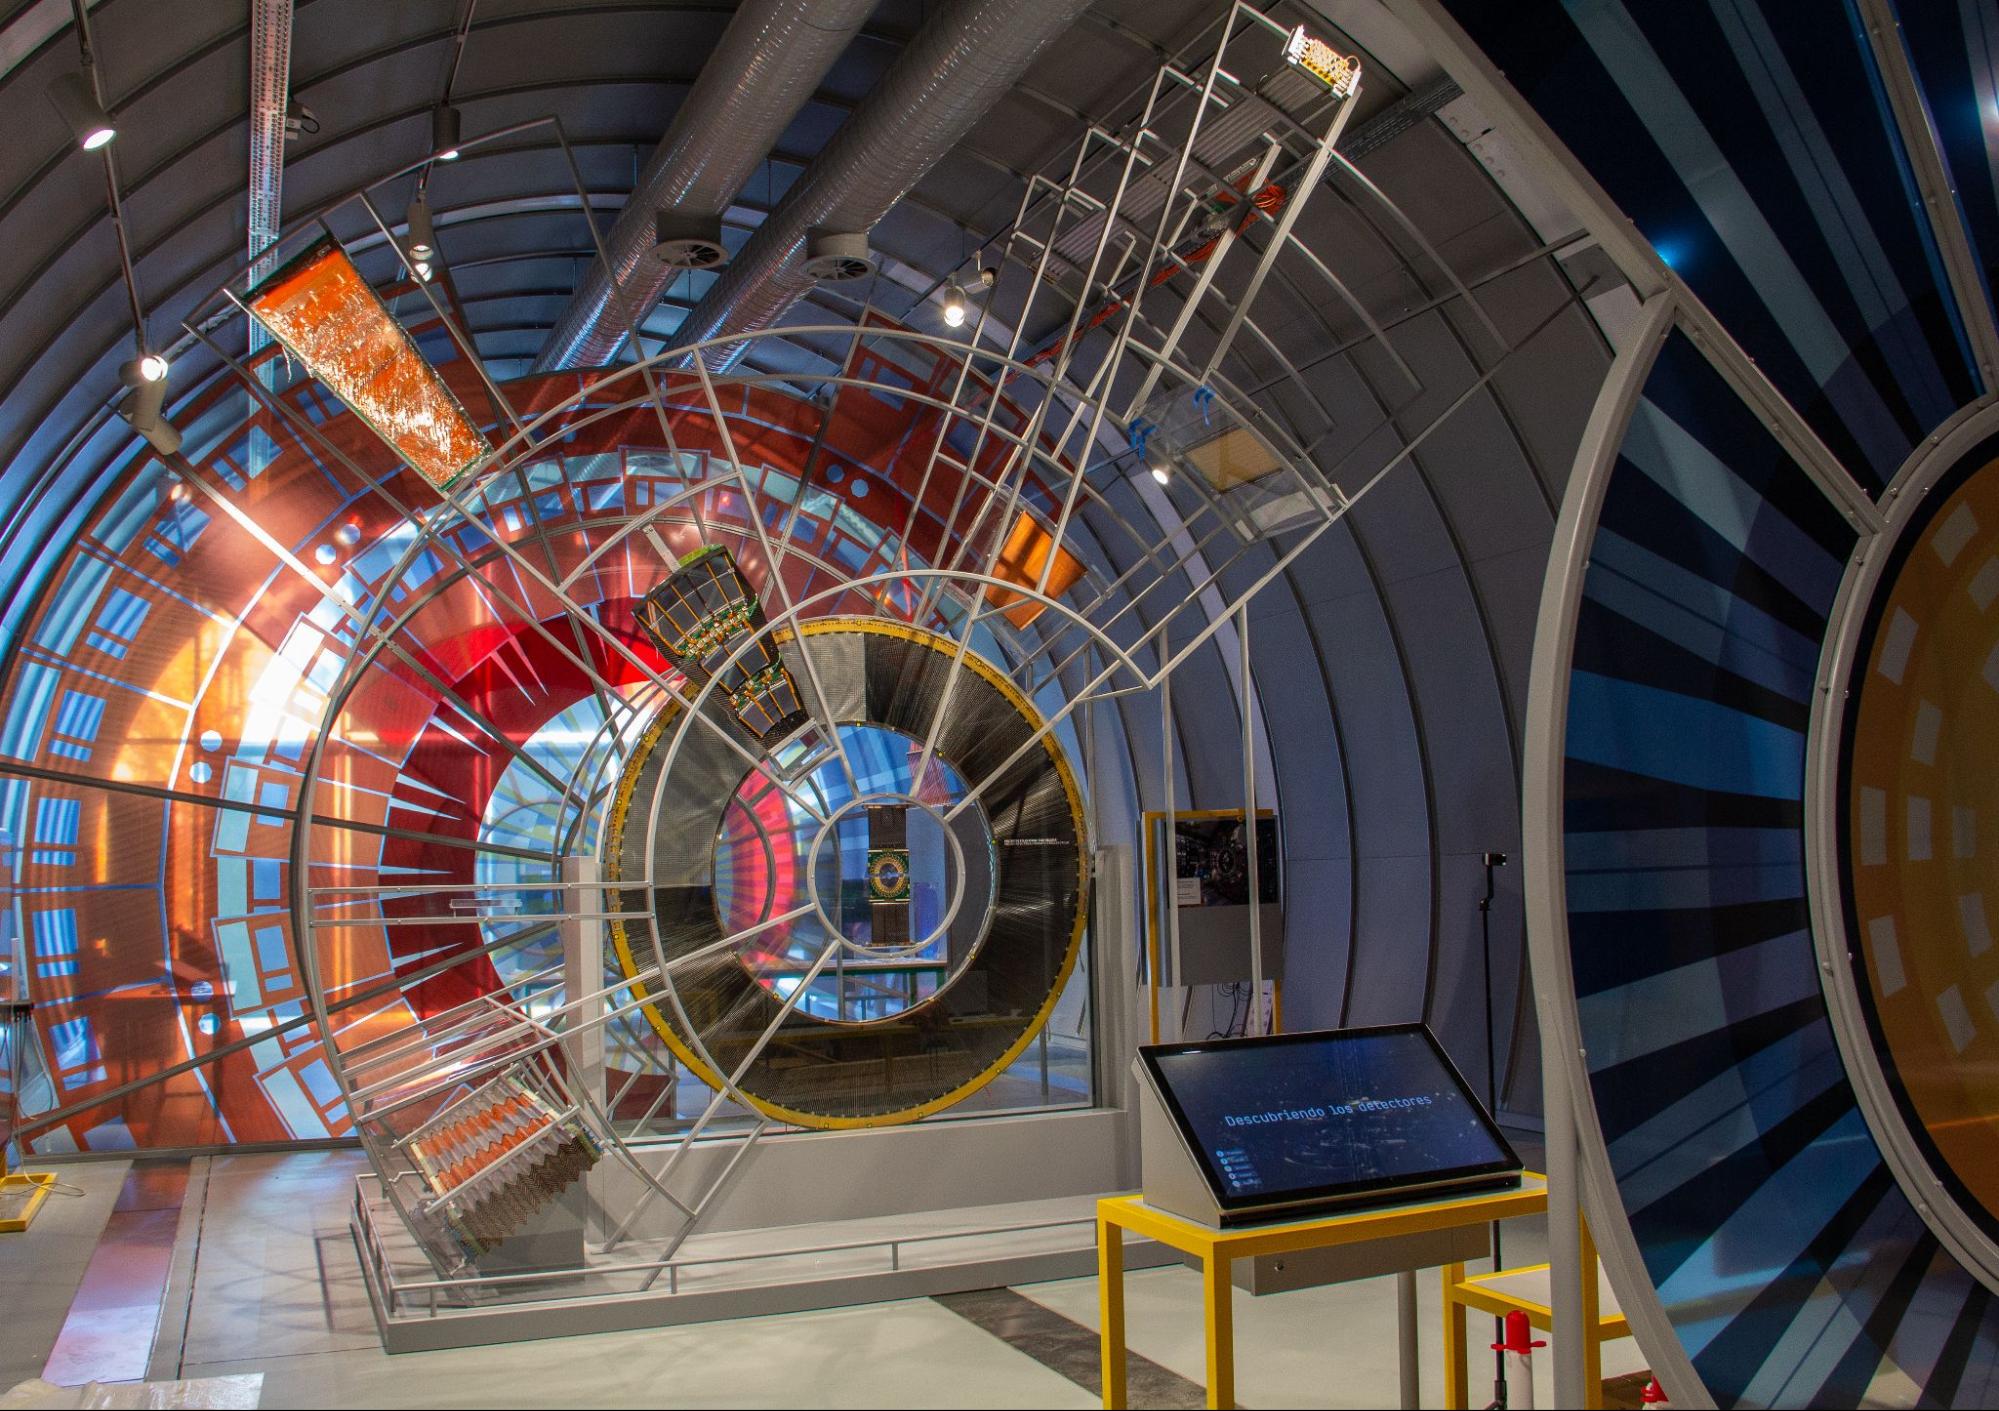 Detector exhibit at the CERN Science Gateway